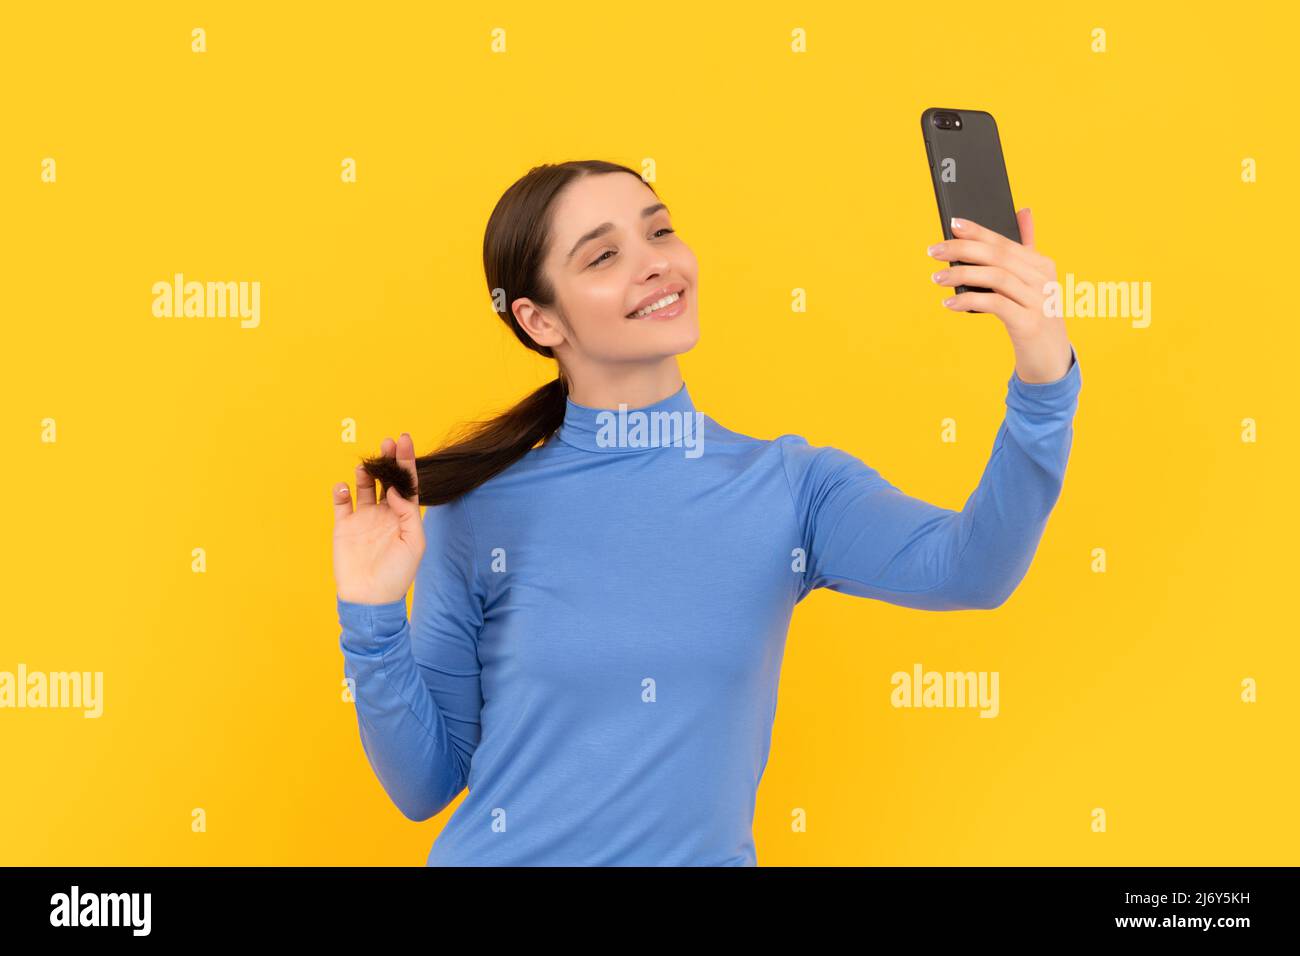 smiling woman making selfie photo on smartphone, selfie Stock Photo